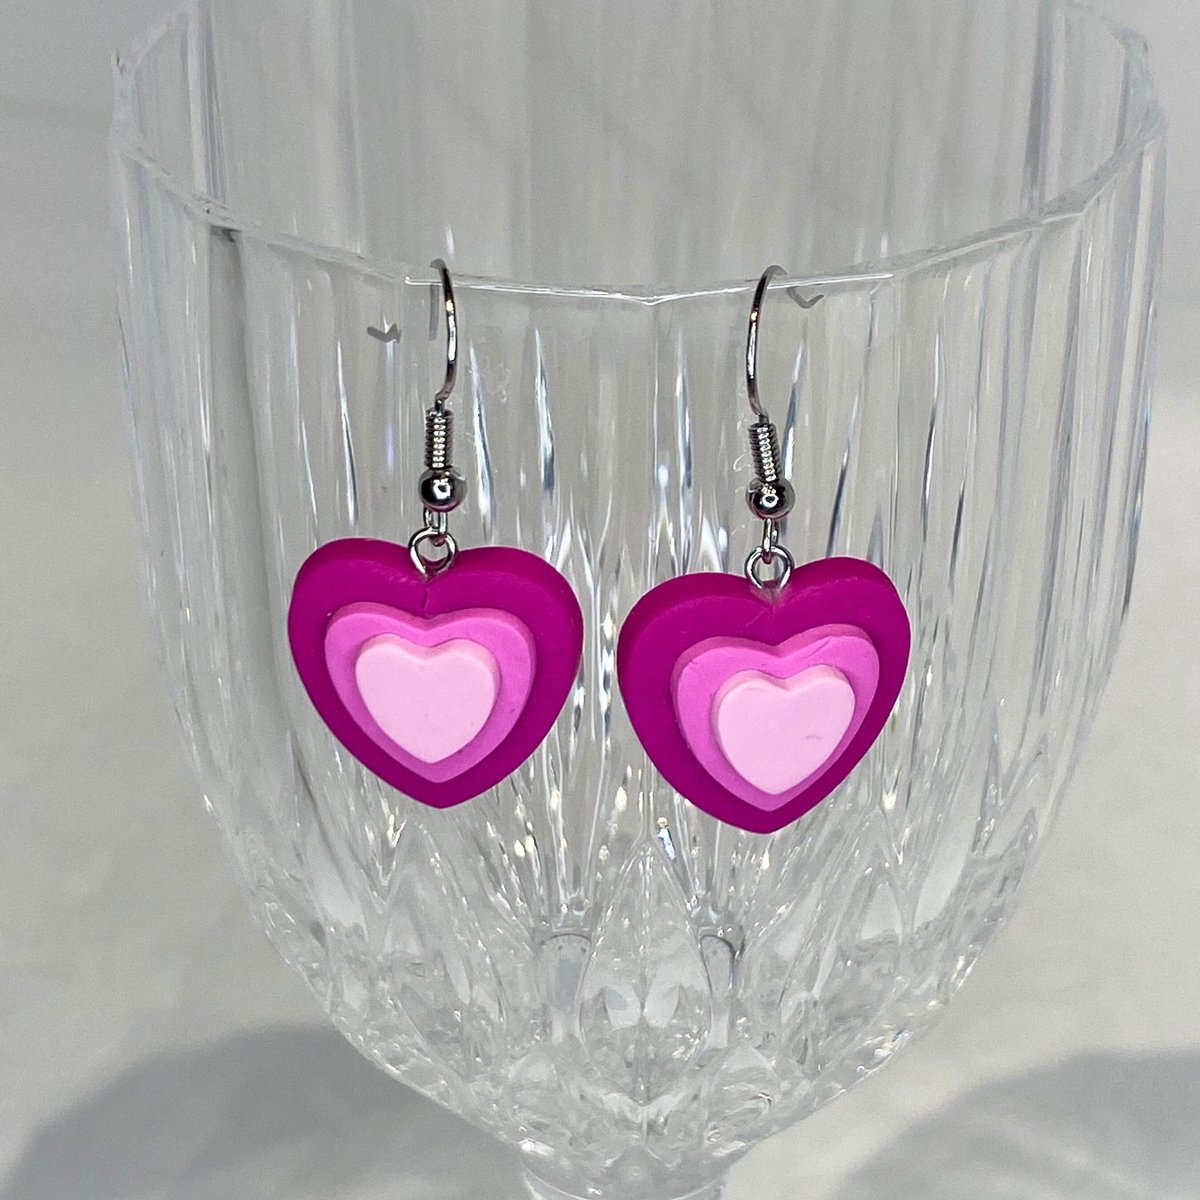 #Valentine Pink Heart Earrings Dangle Dimensional Heart Earrings etsy.me/3GTRRYg #valentinesday #heart #love #earrings #handmade #ValentineJewelry